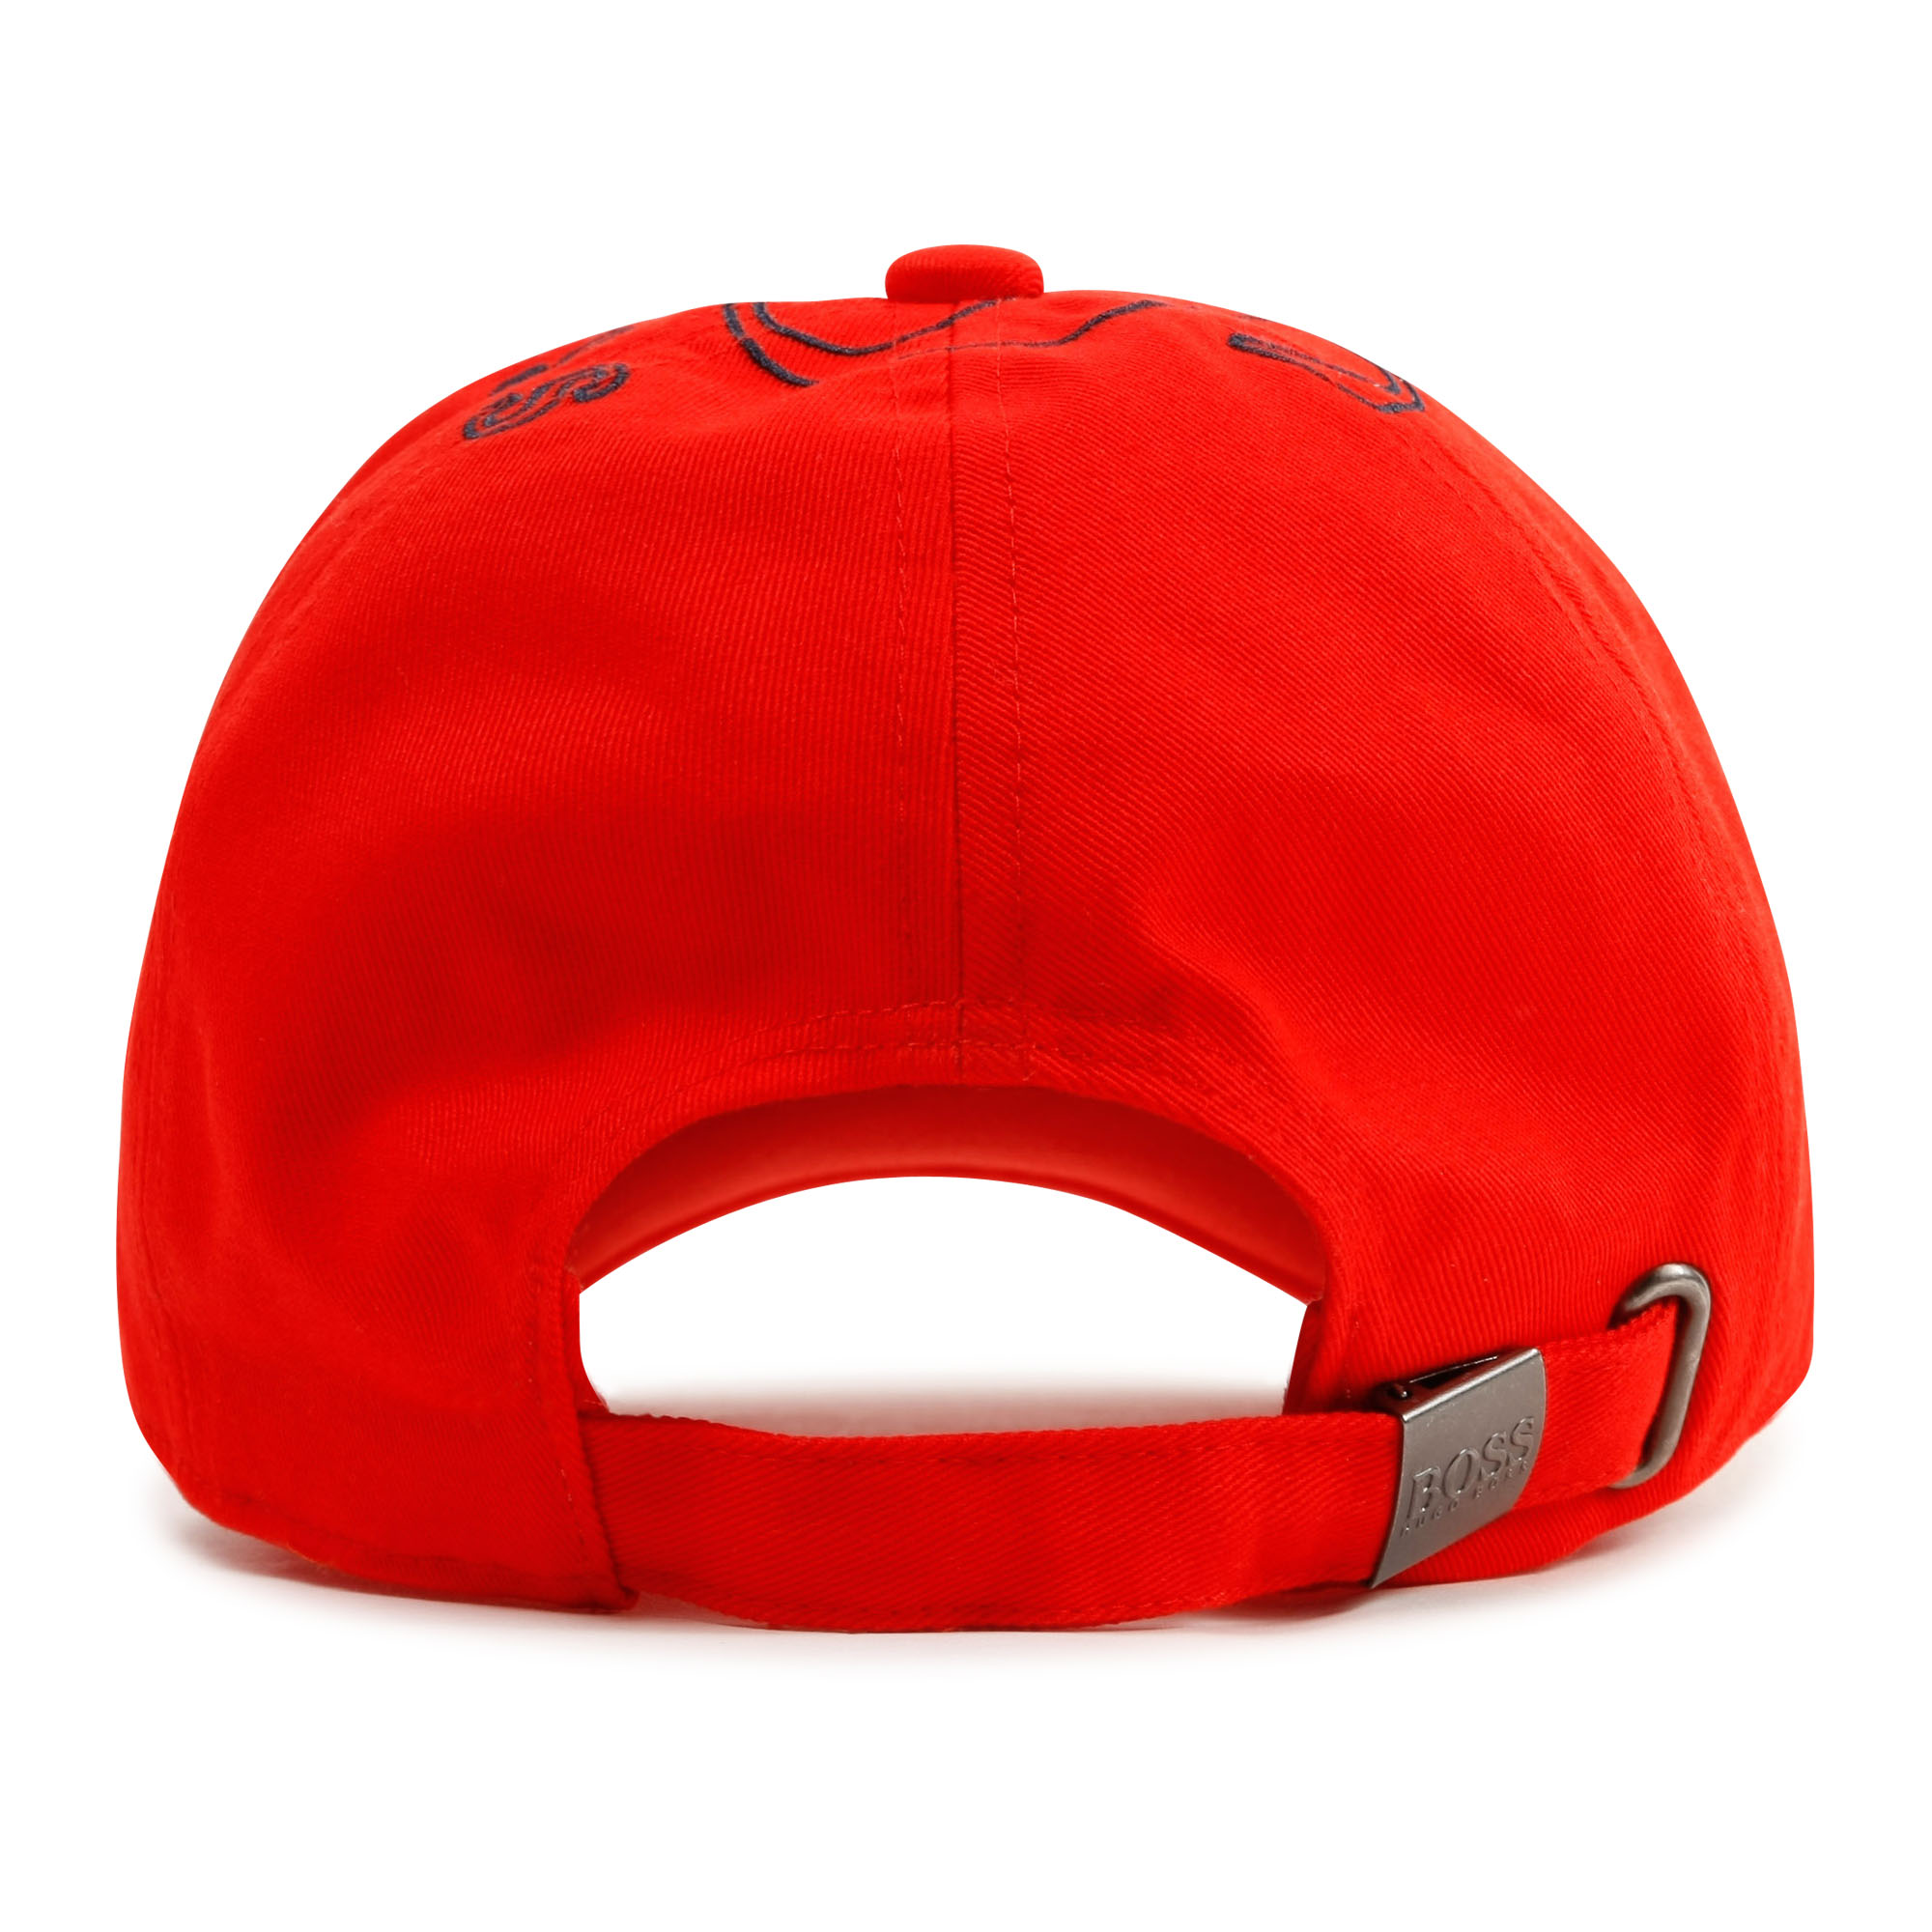 Cotton twill baseball cap BOSS for BOY